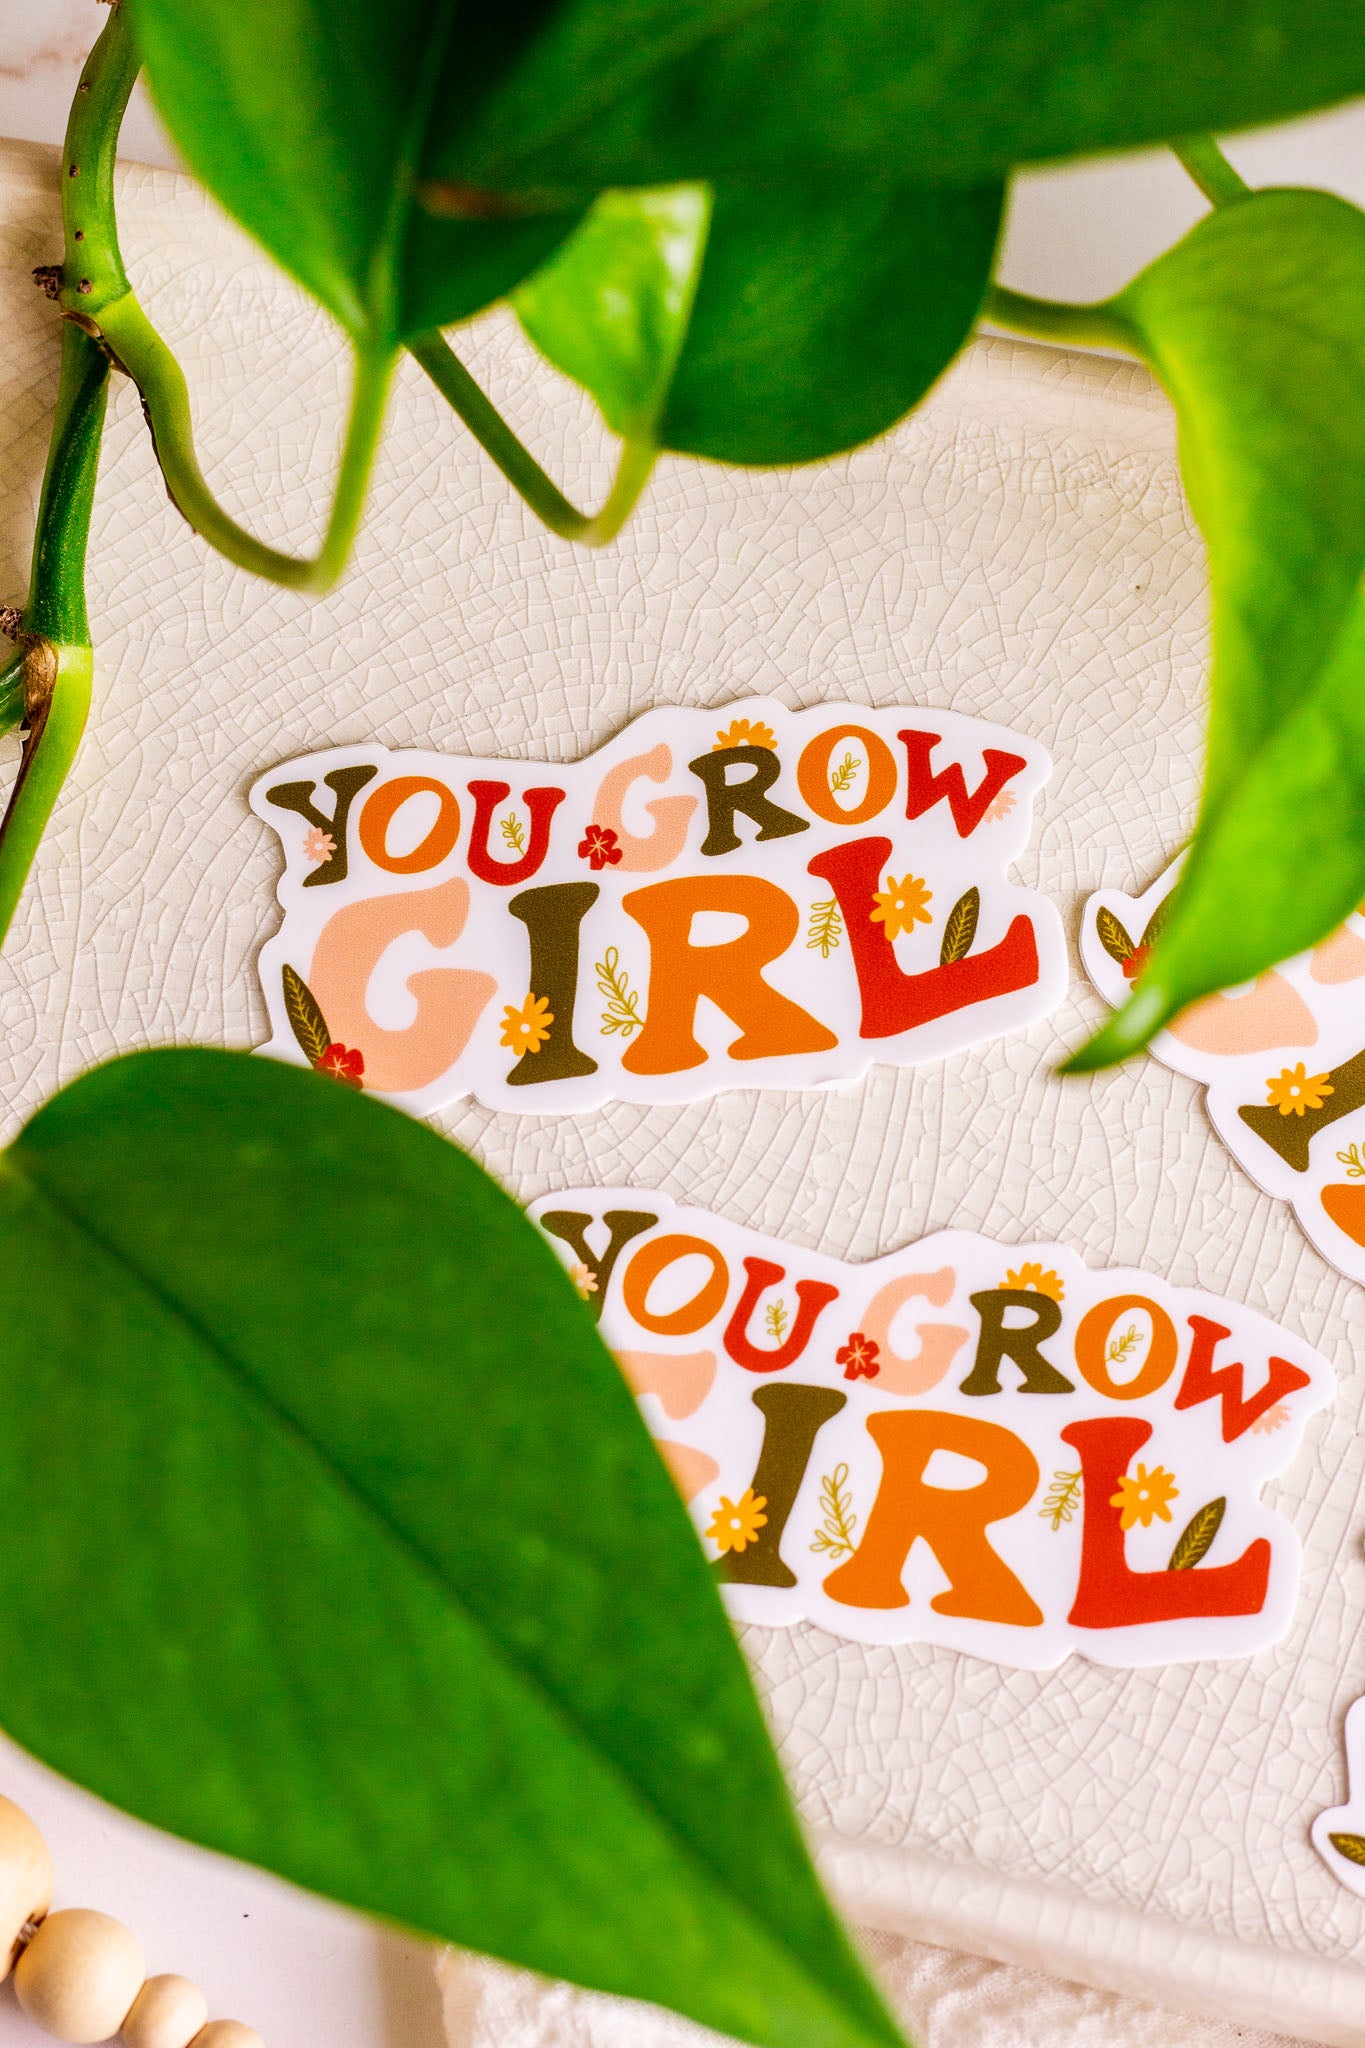 You Go Girl' Sticker